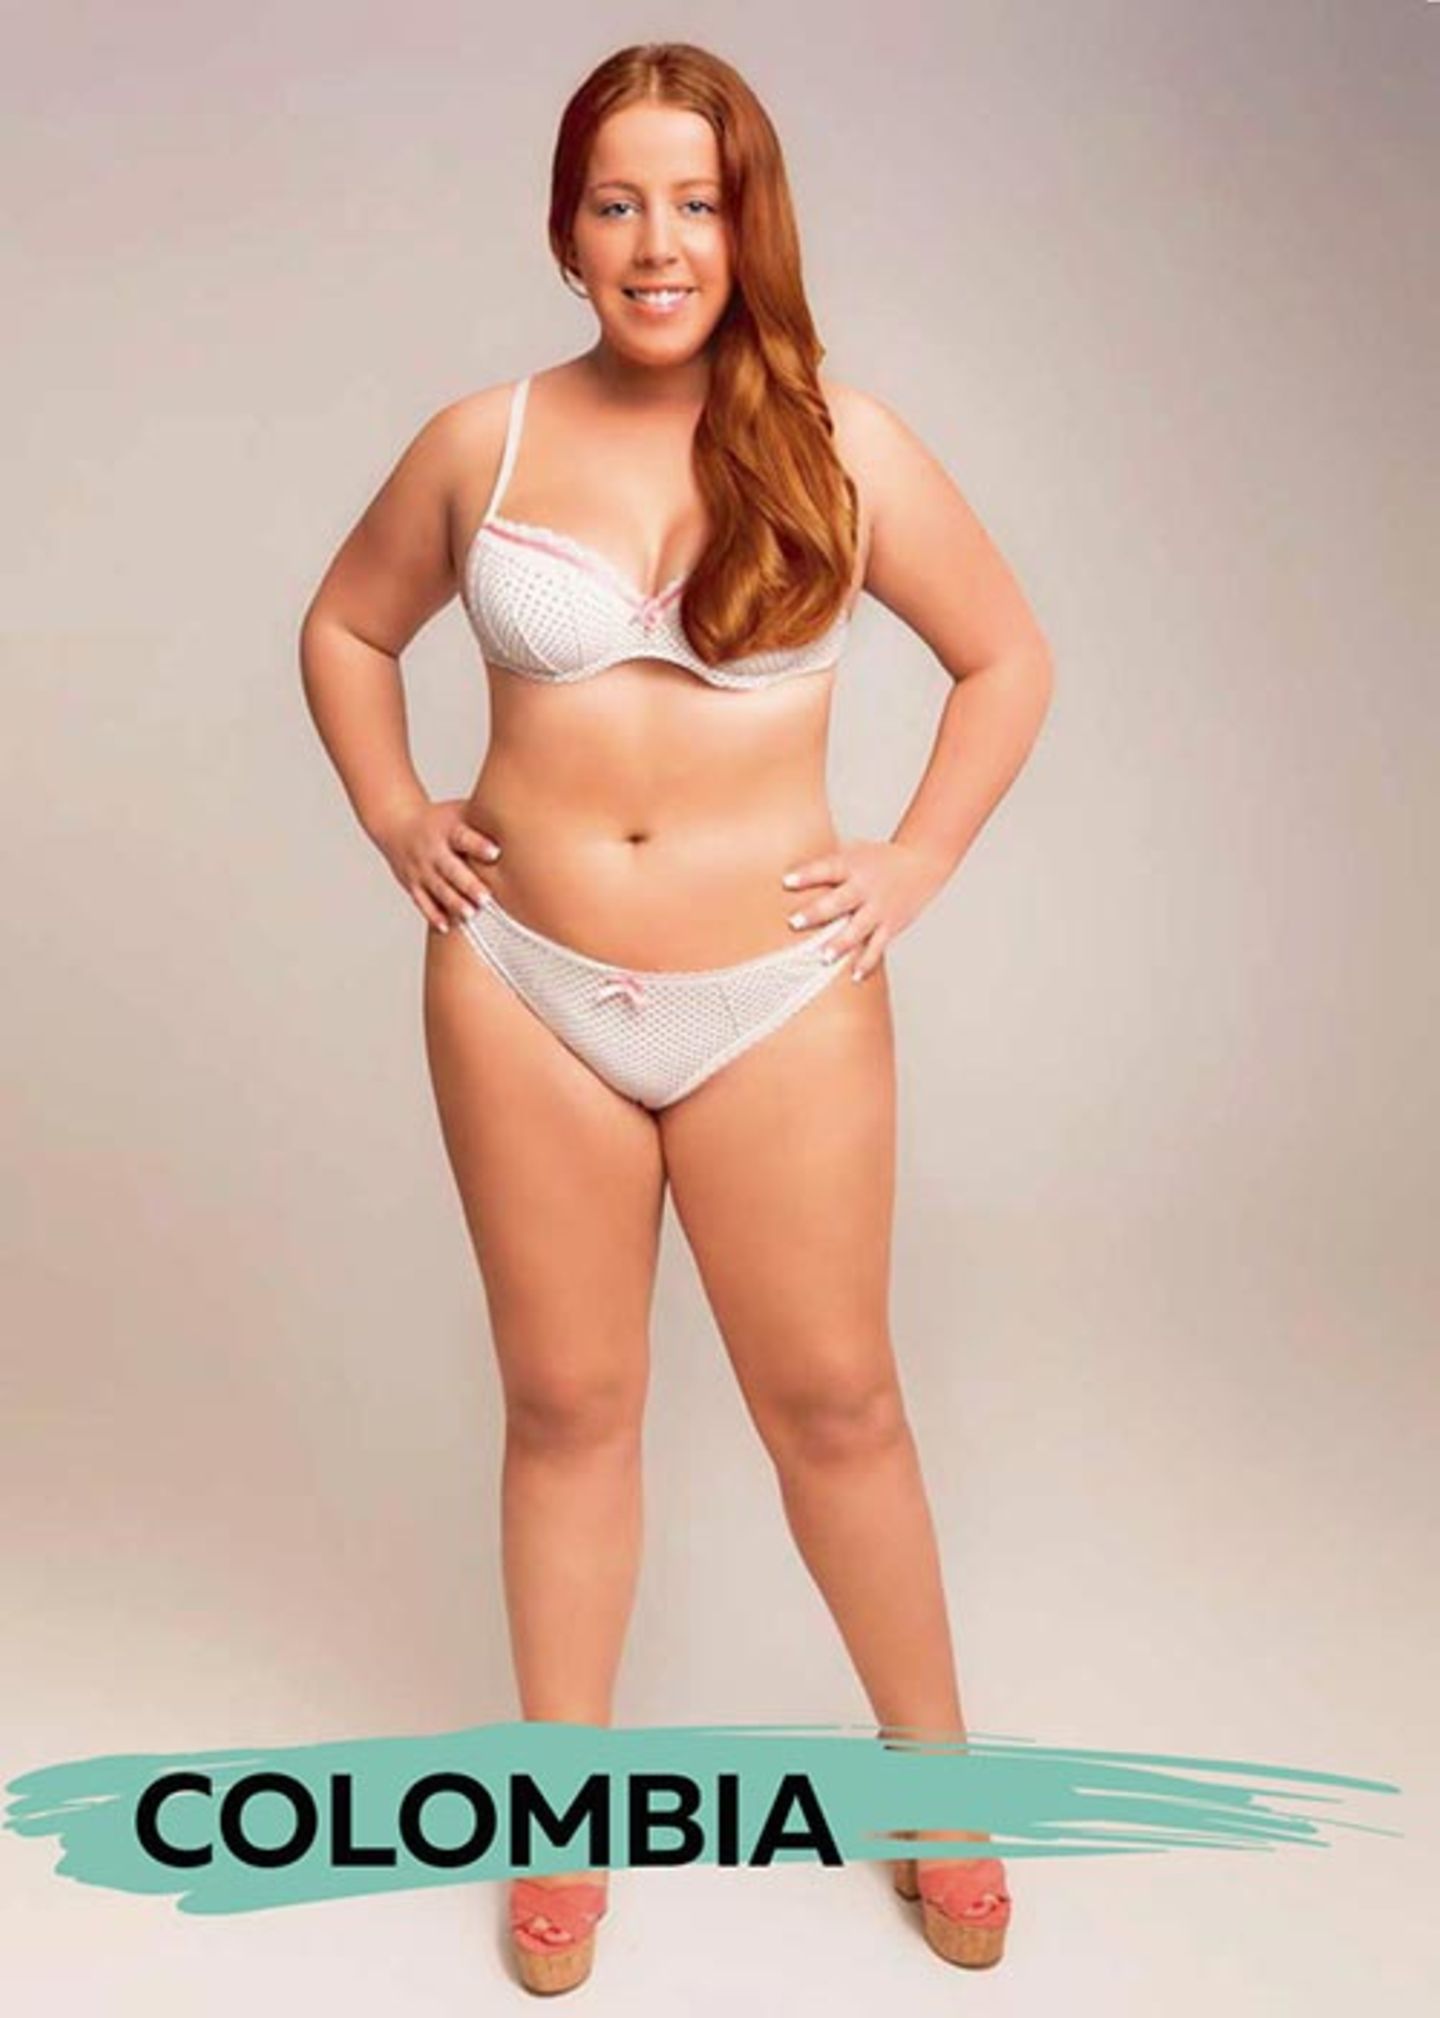 Tolles Fotoprojekt: Eine Frau, 18 "perfekte" Körper